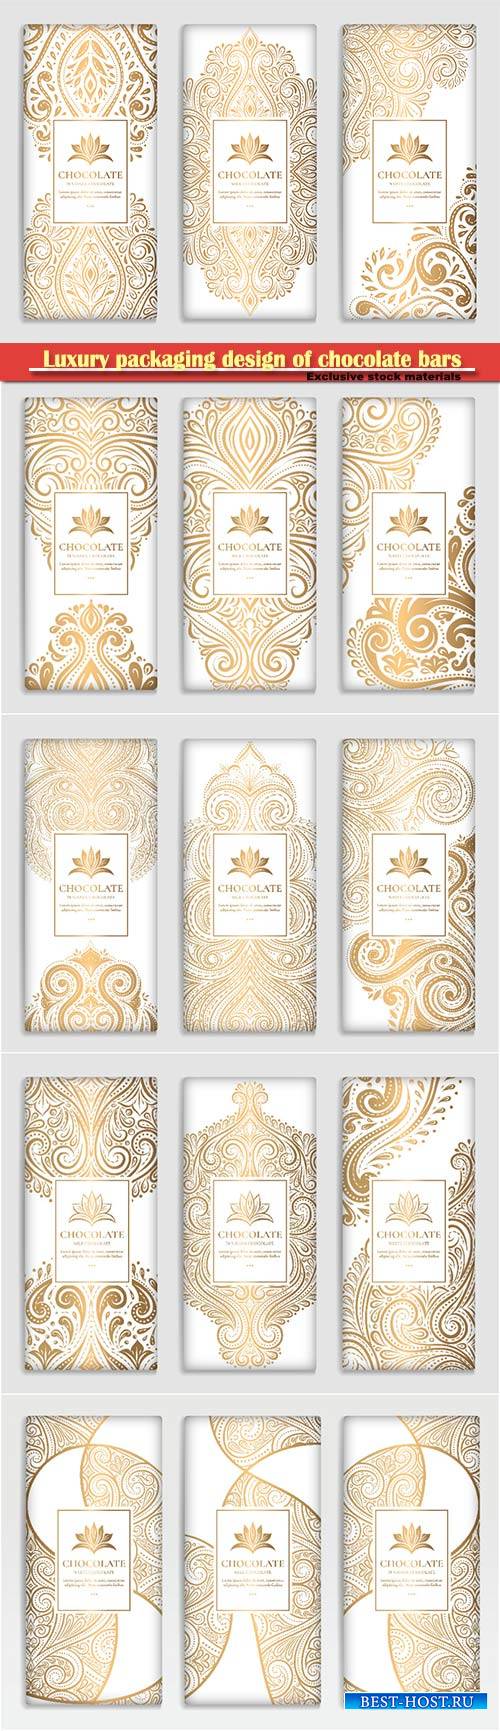 Luxury golden packaging design of chocolate bars